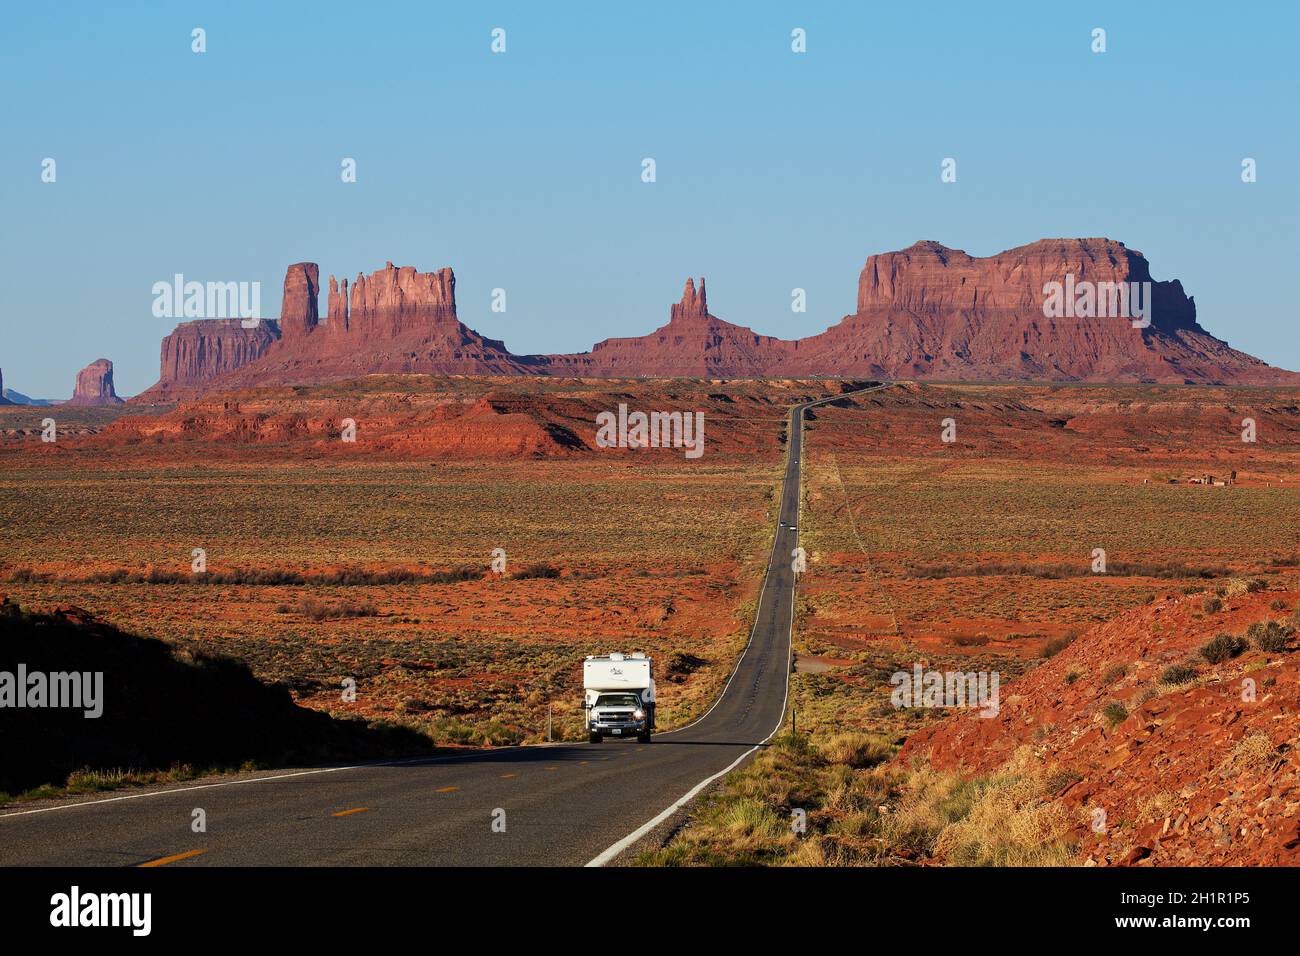 RV on U.S. Route 163, Monument Valley, Navajo Nation, Utah, near Arizona Border, USA Stock Photo